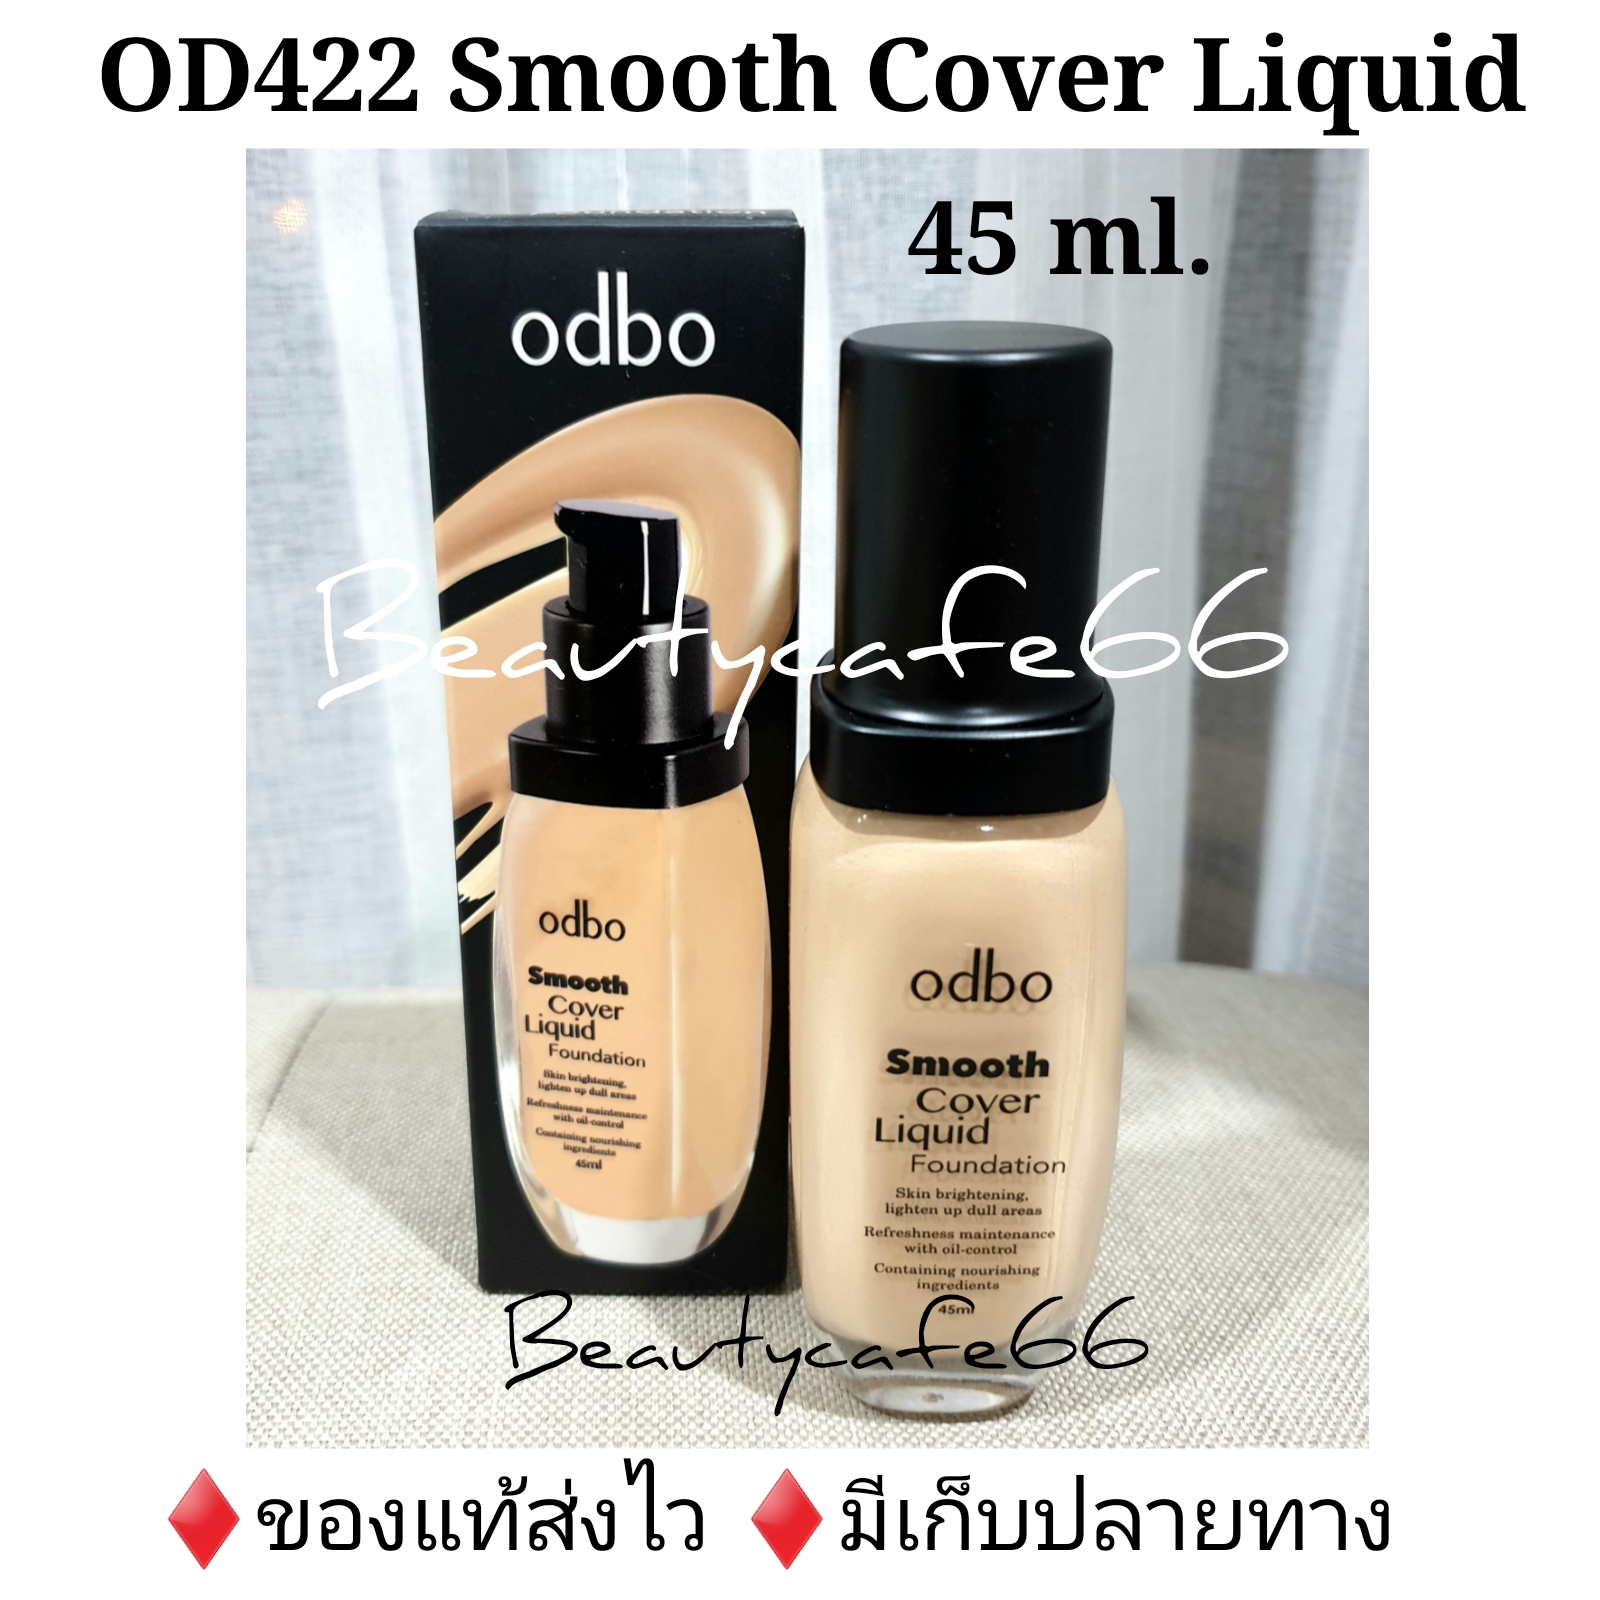 OD422 odbo Smoothe Cover Liquid Foundation รองพื้น โอดีบีโอ กันน้ำ ปกปิด ติดทน คุมมัน 45 ml. ขายดีอันดับ 1